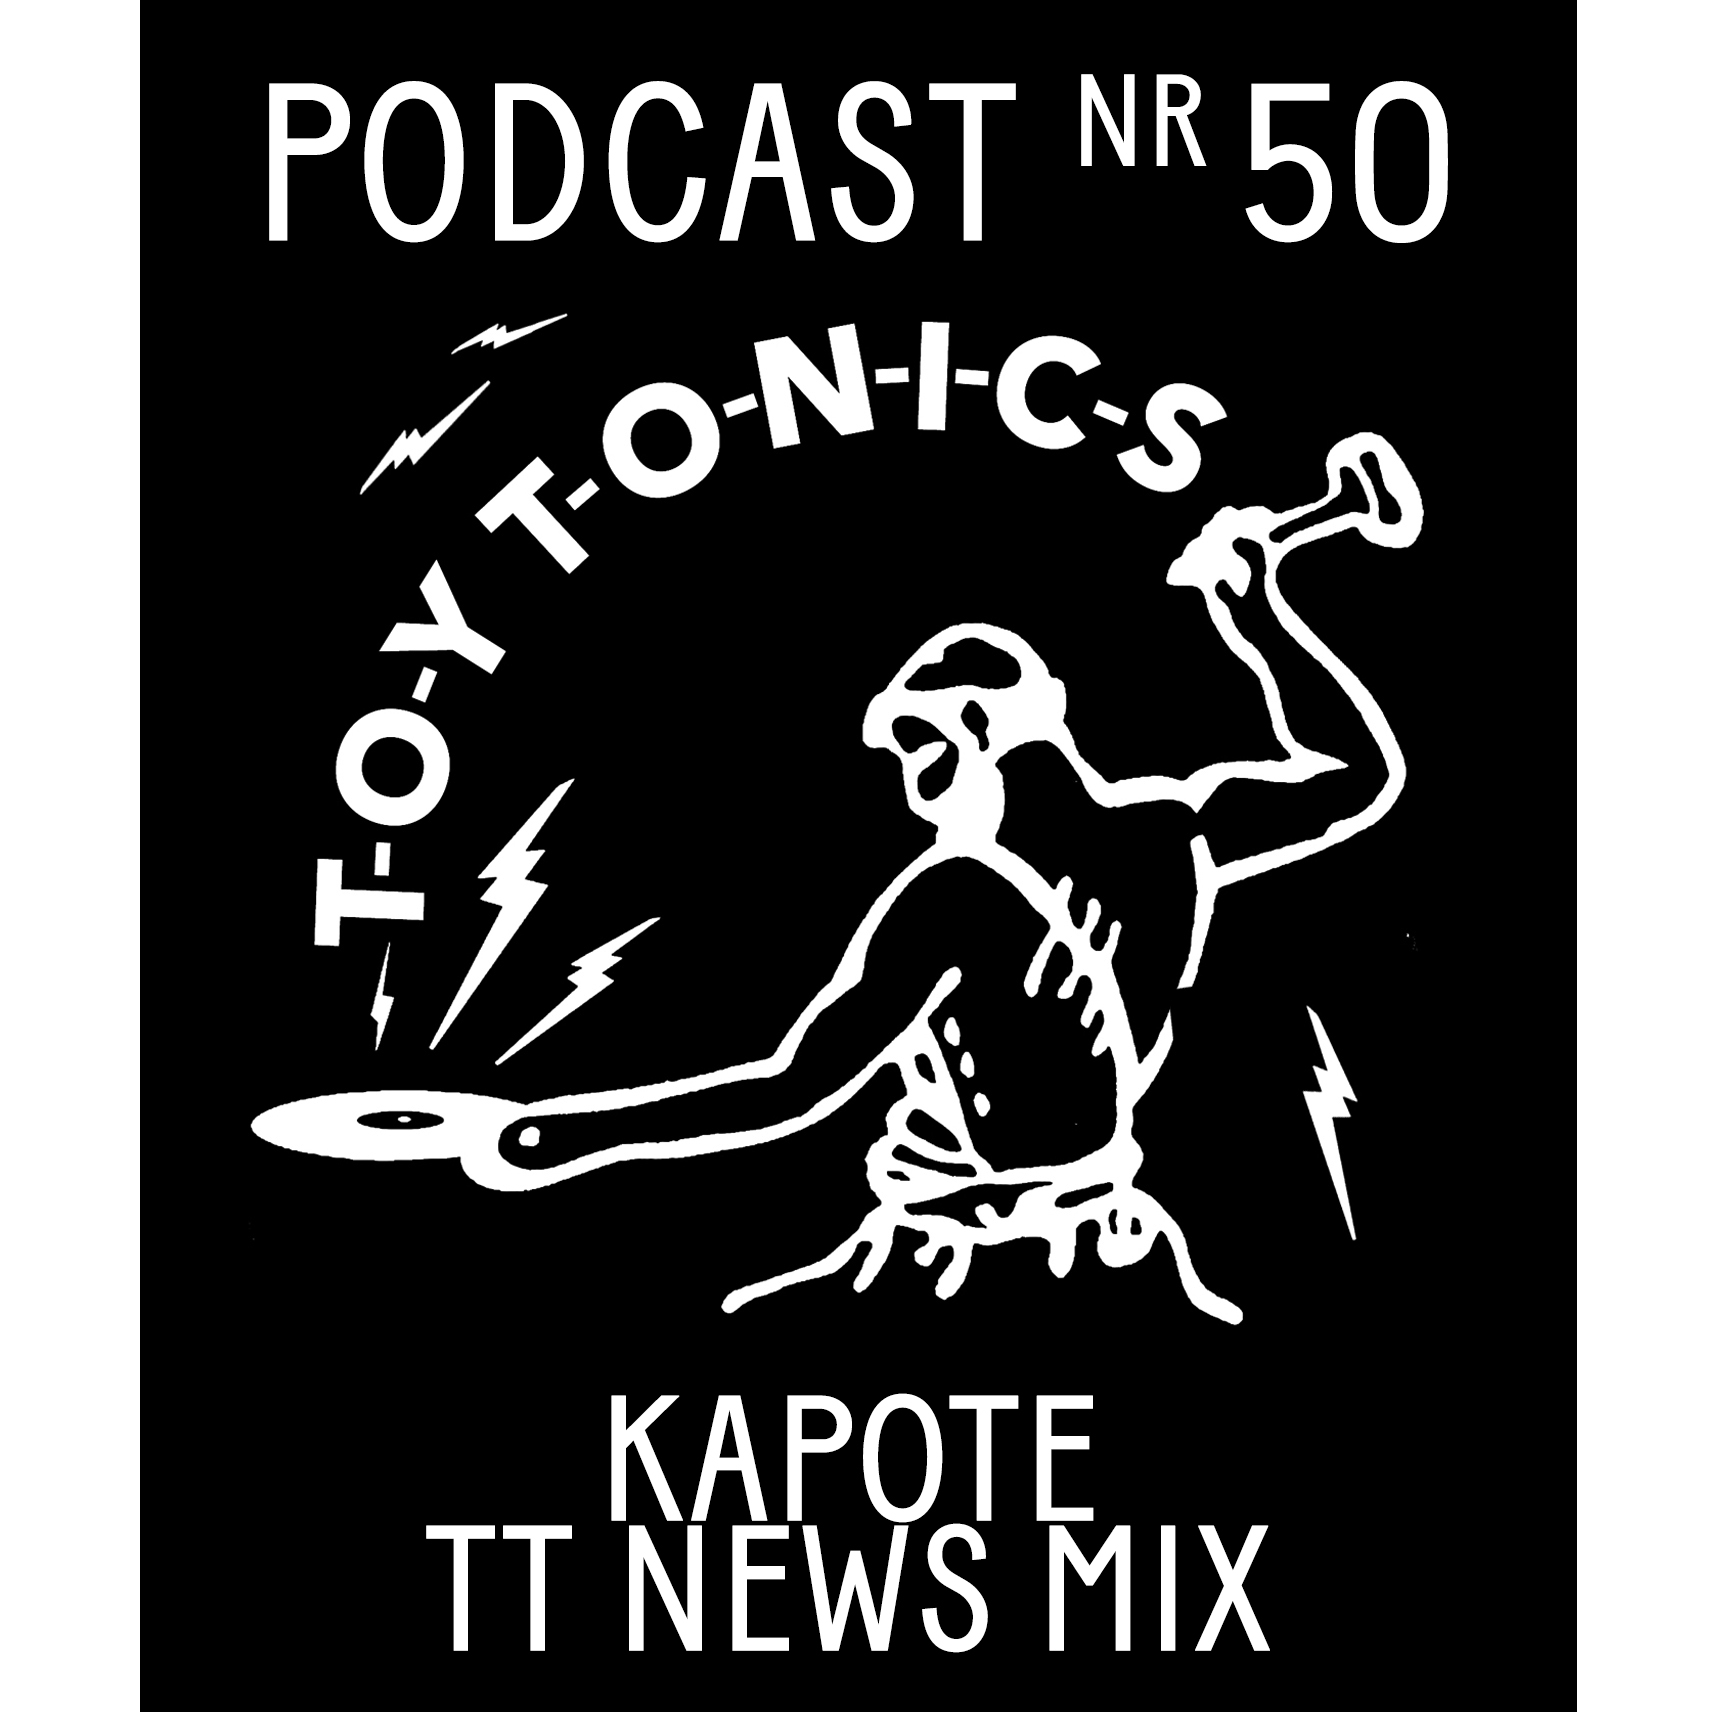 PODCAST NR 50 - Kapote TT News Mix